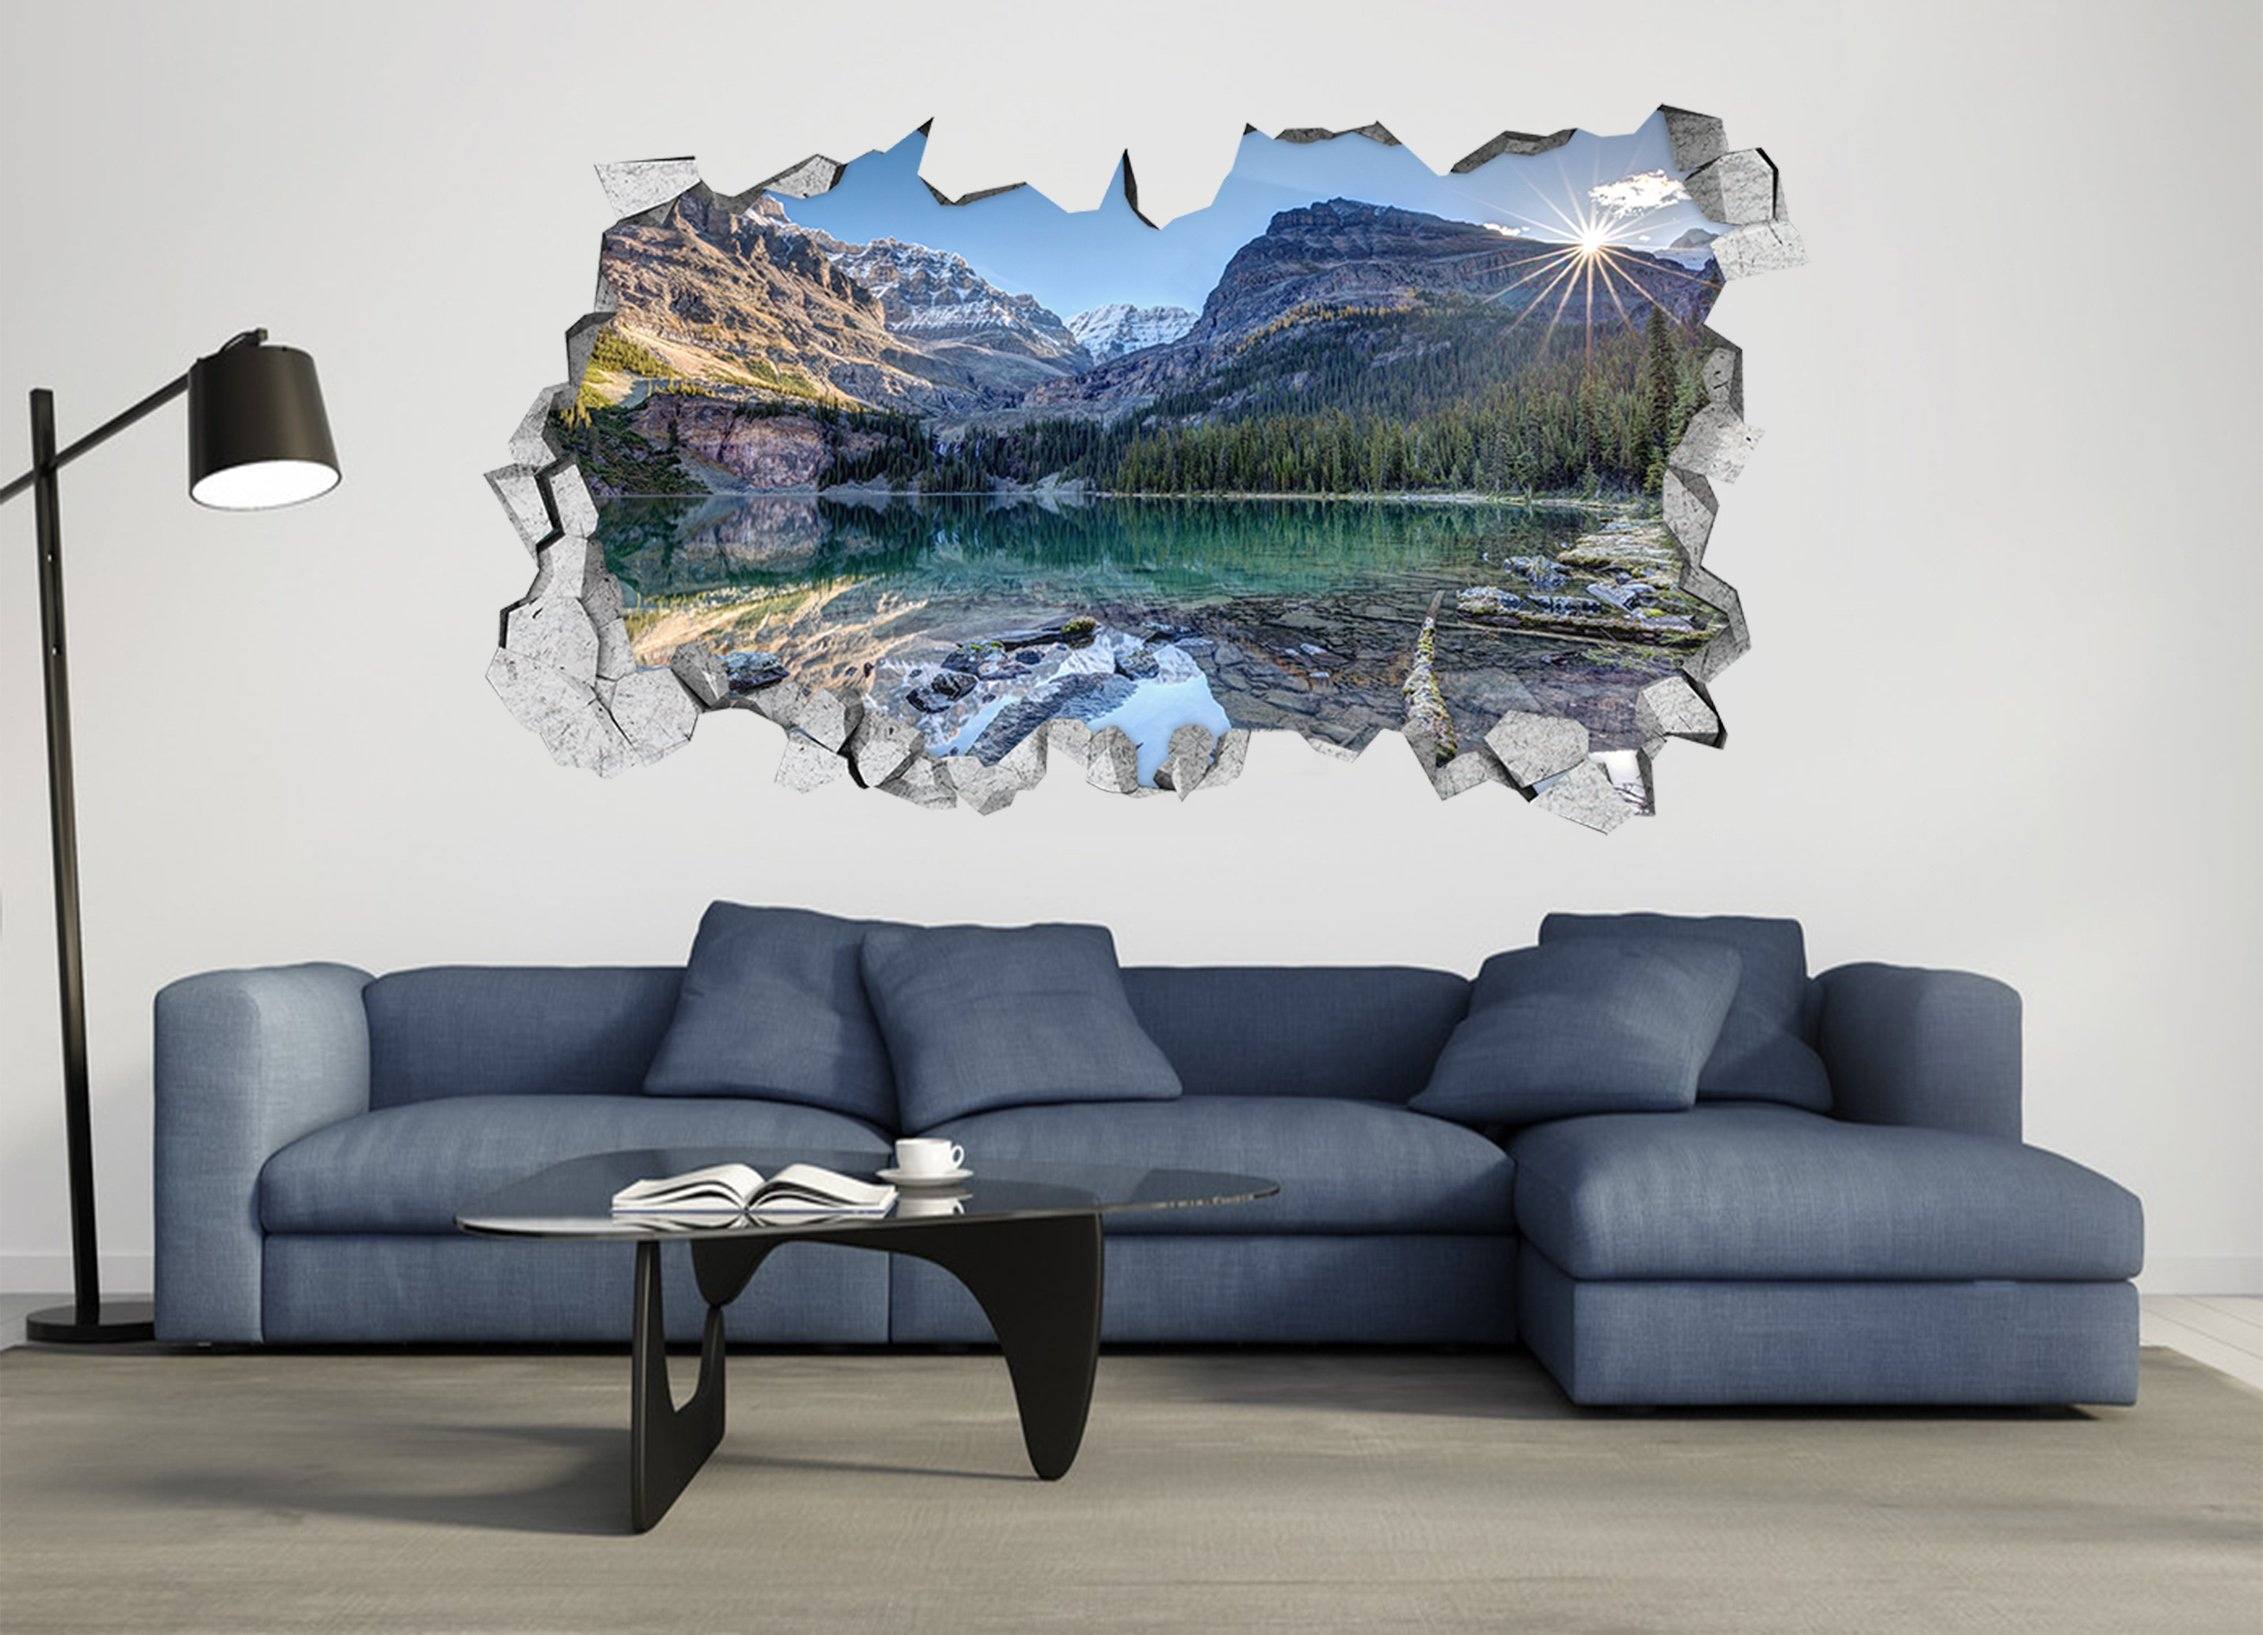 3D Mountain Lake Scenery 183 Broken Wall Murals Wallpaper AJ Wallpaper 